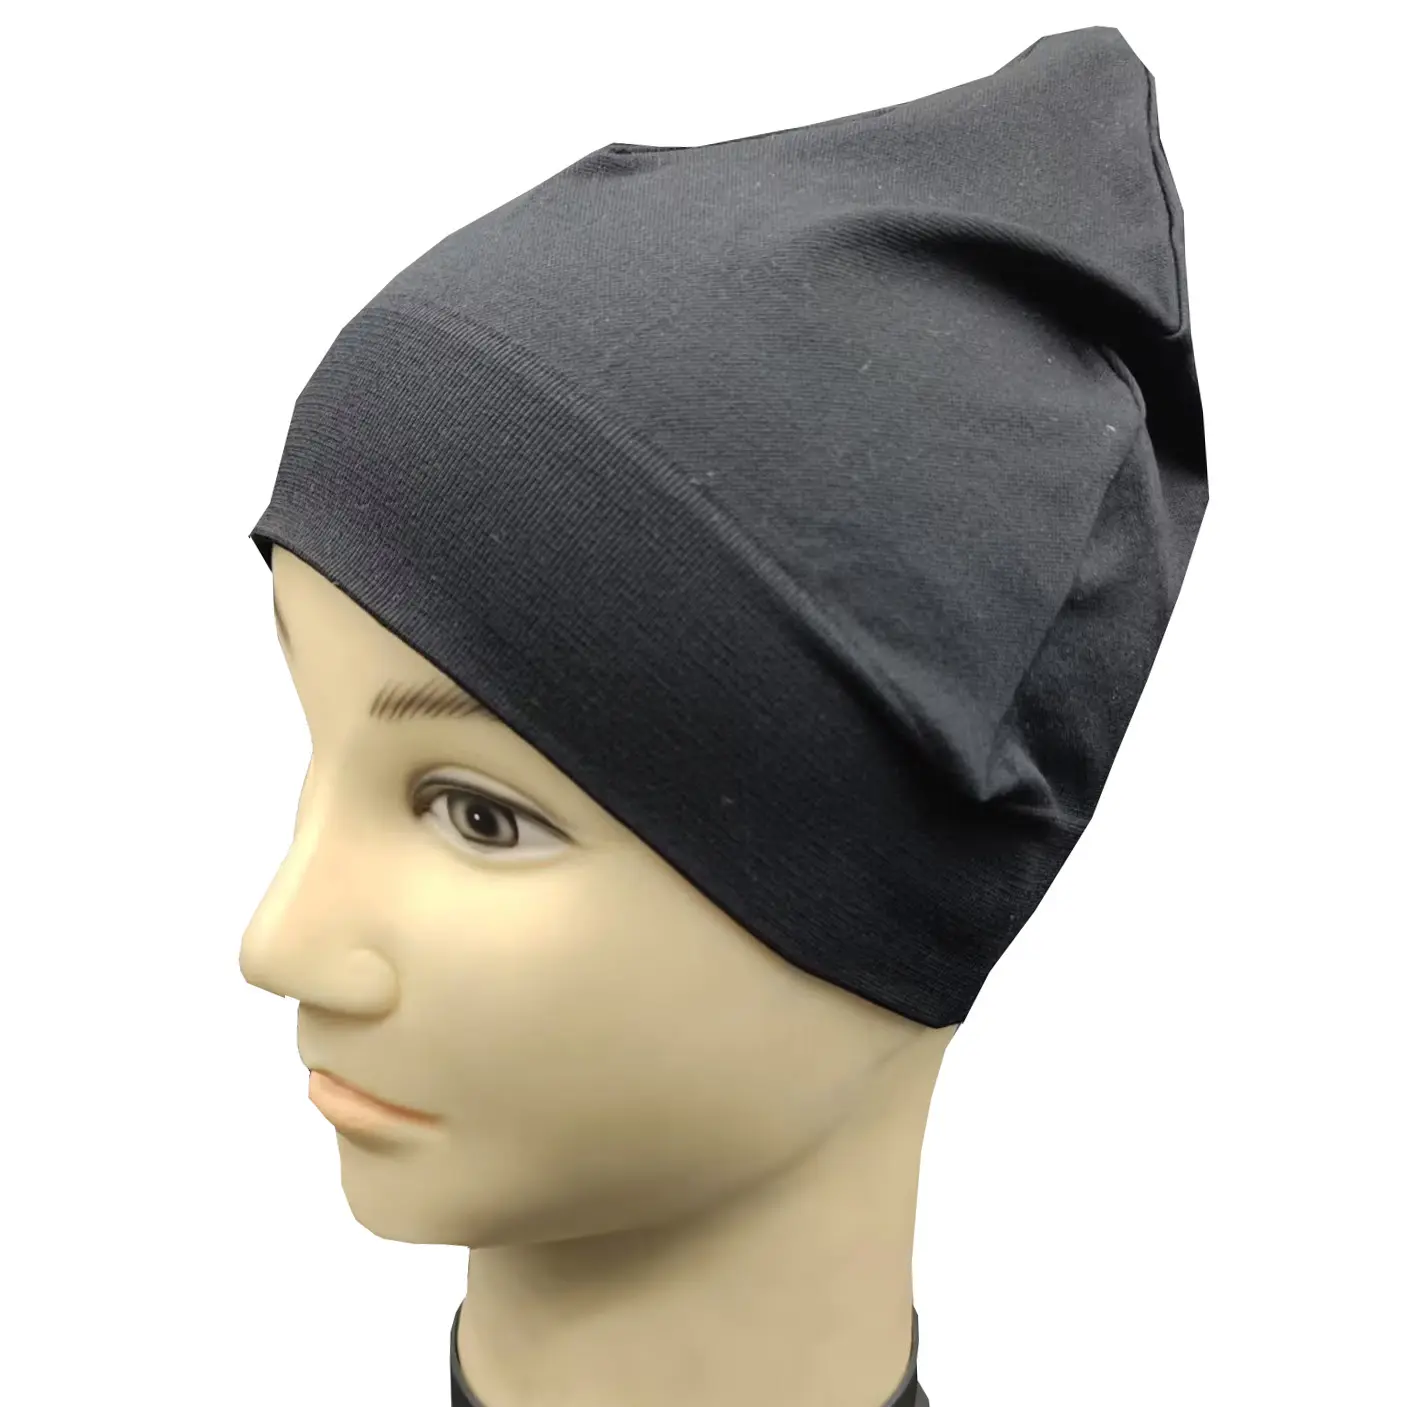 streetwear beanies blank beanies beanie hats knitted sport running hat black skull cap satin lined winter skull cap